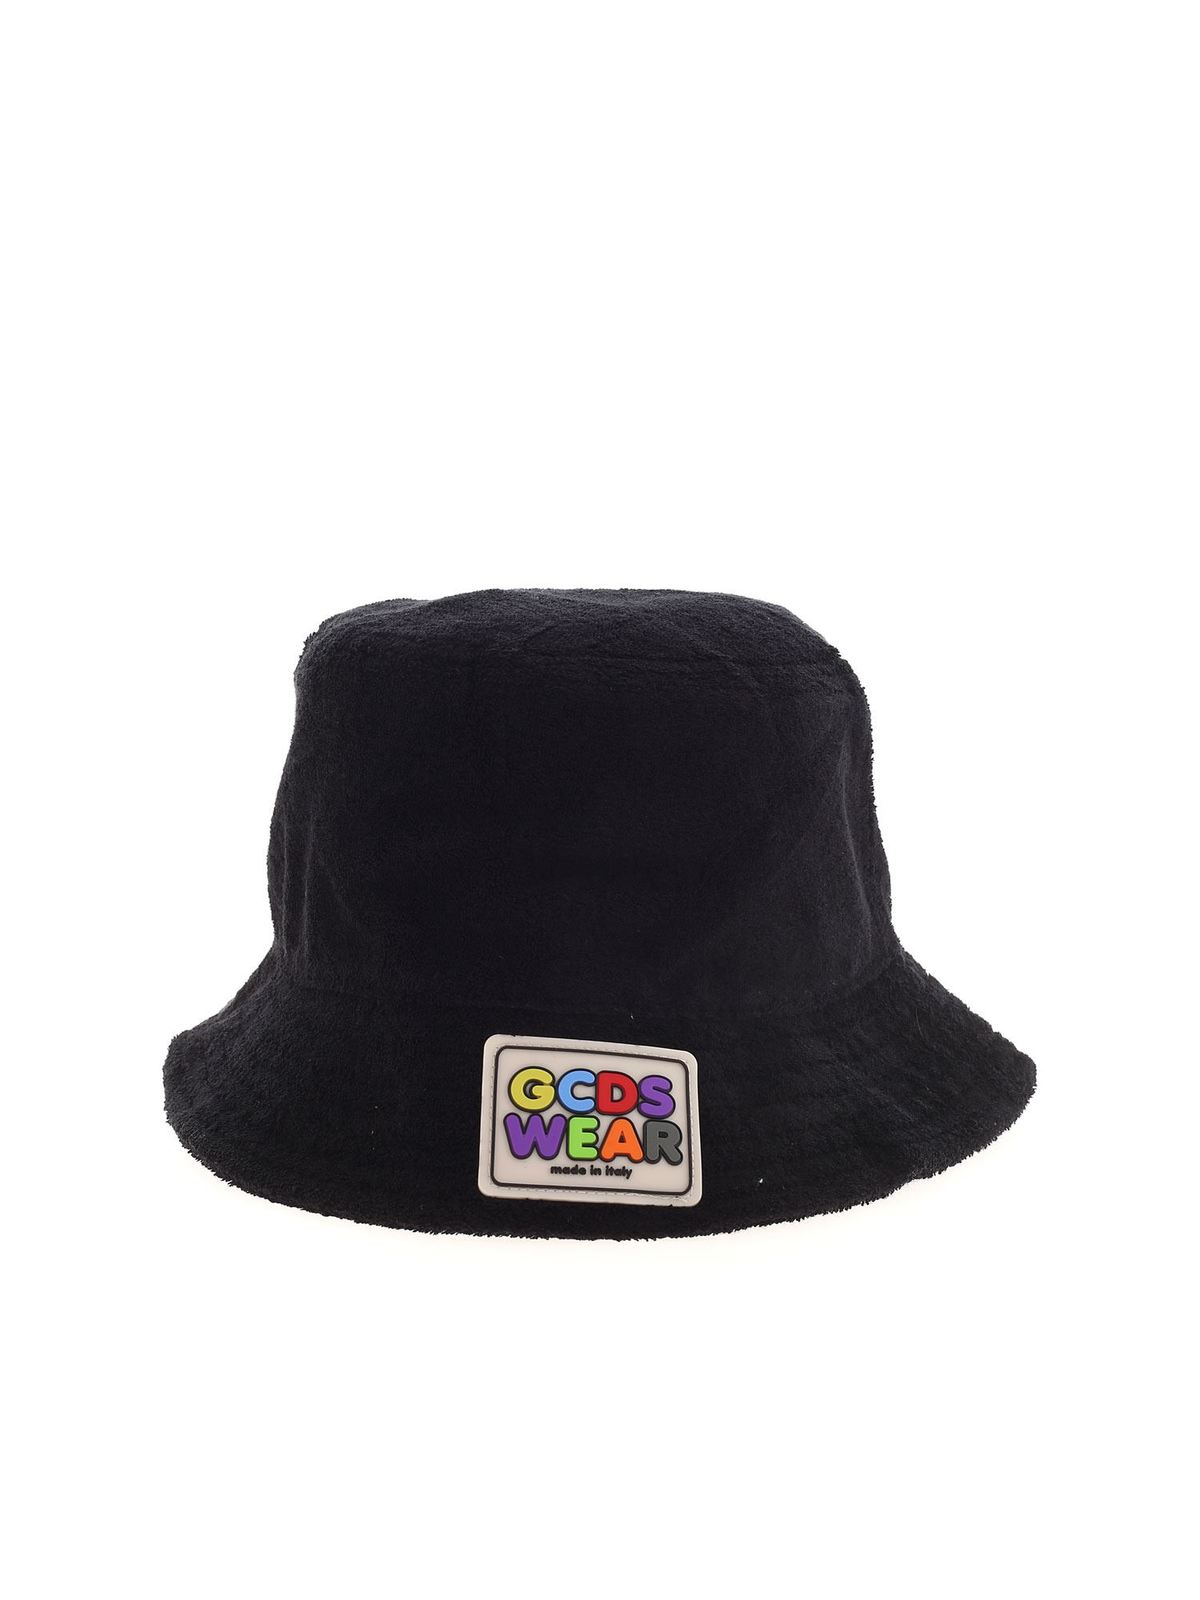 Hats & caps Gcds - Logo patch hat in black - SS21M01007902 | iKRIX.com